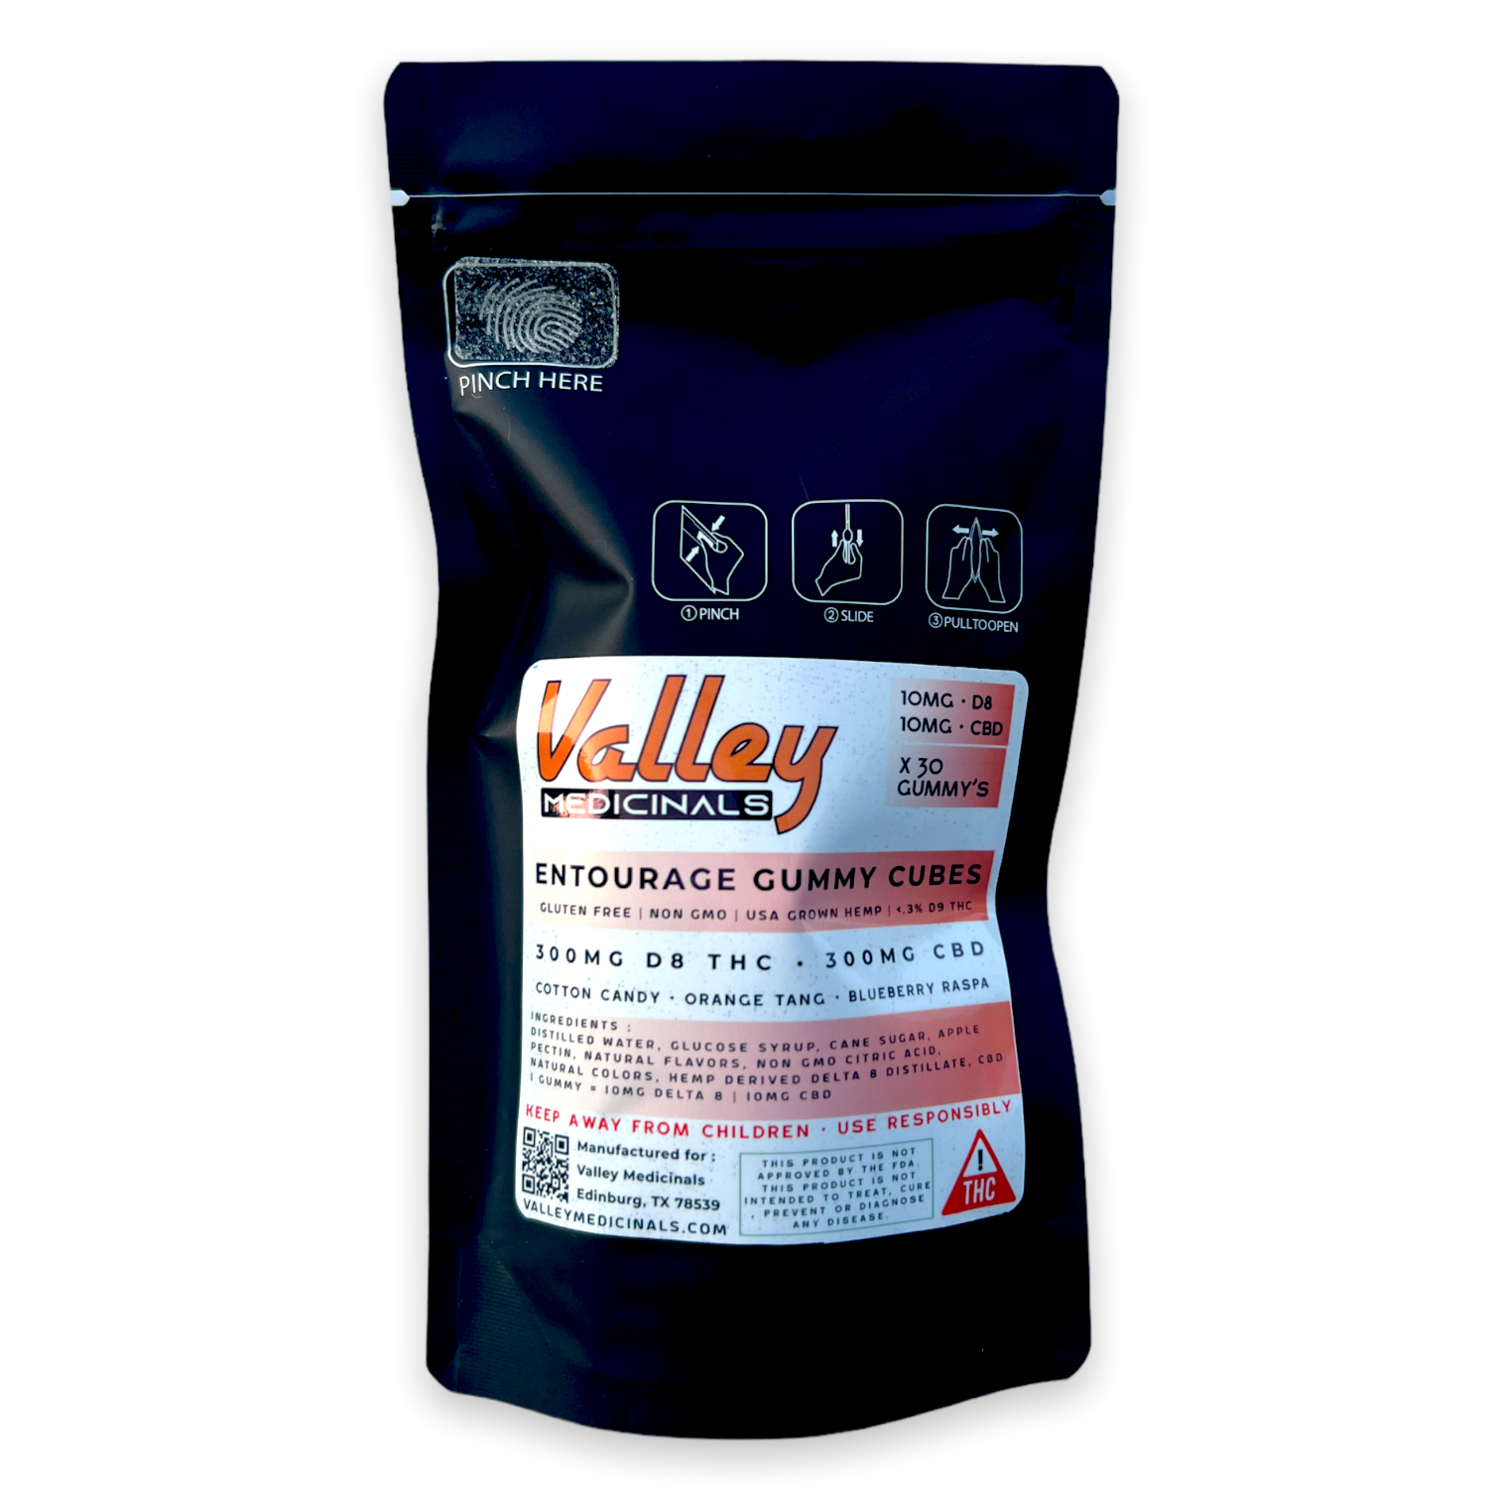 Valley Medicinals’ Entourage D8 THC:CBD Vegan Gummy's 10MG